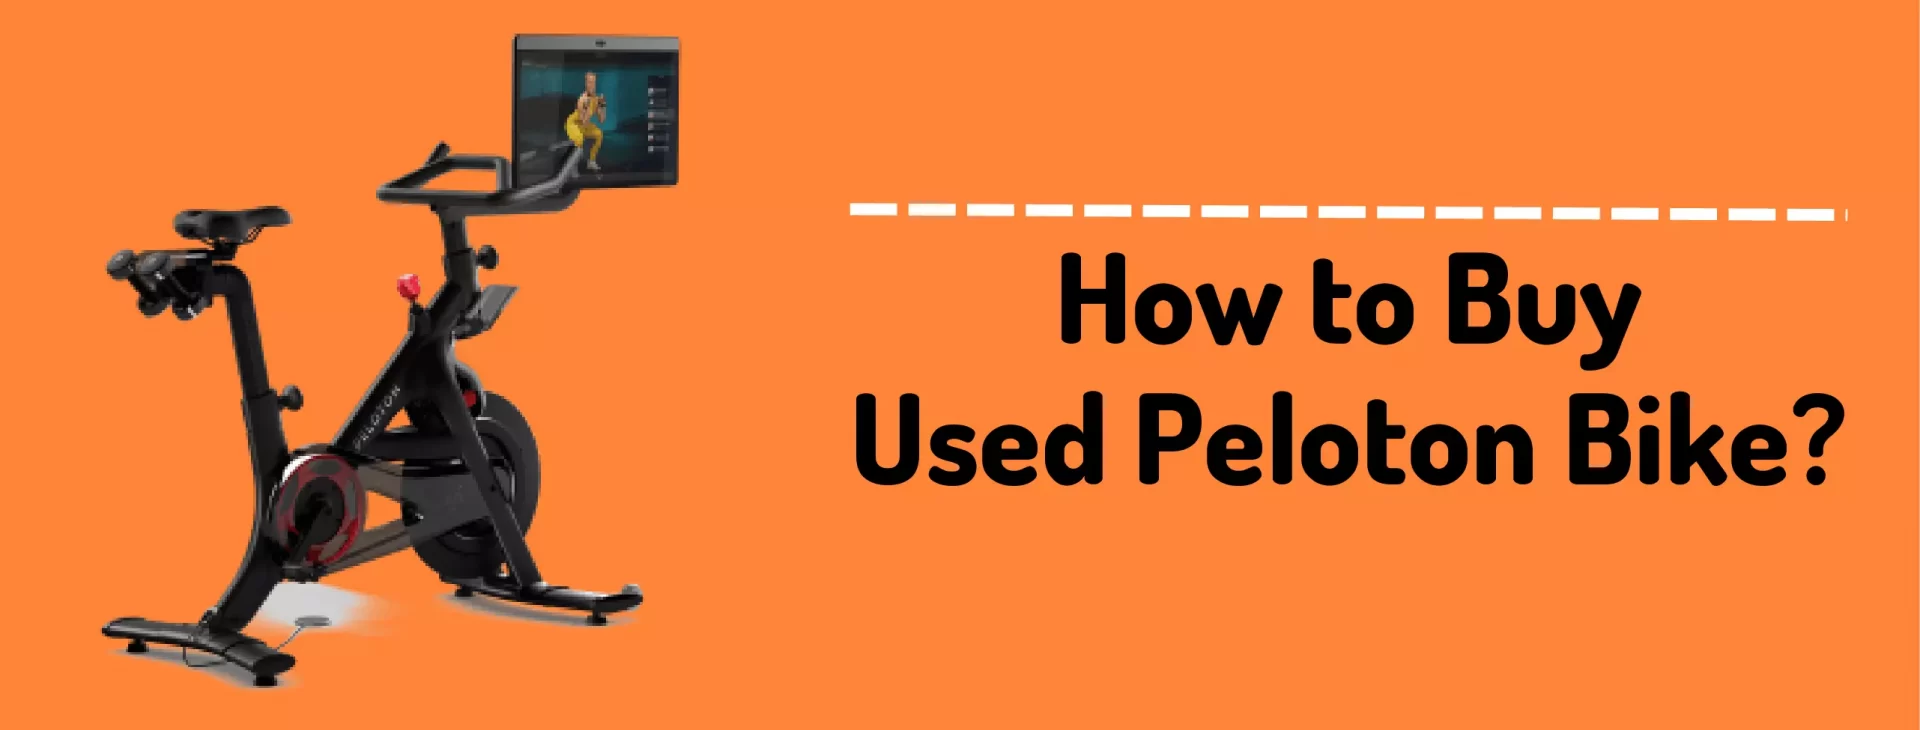 How to Buy Used Peloton Bike